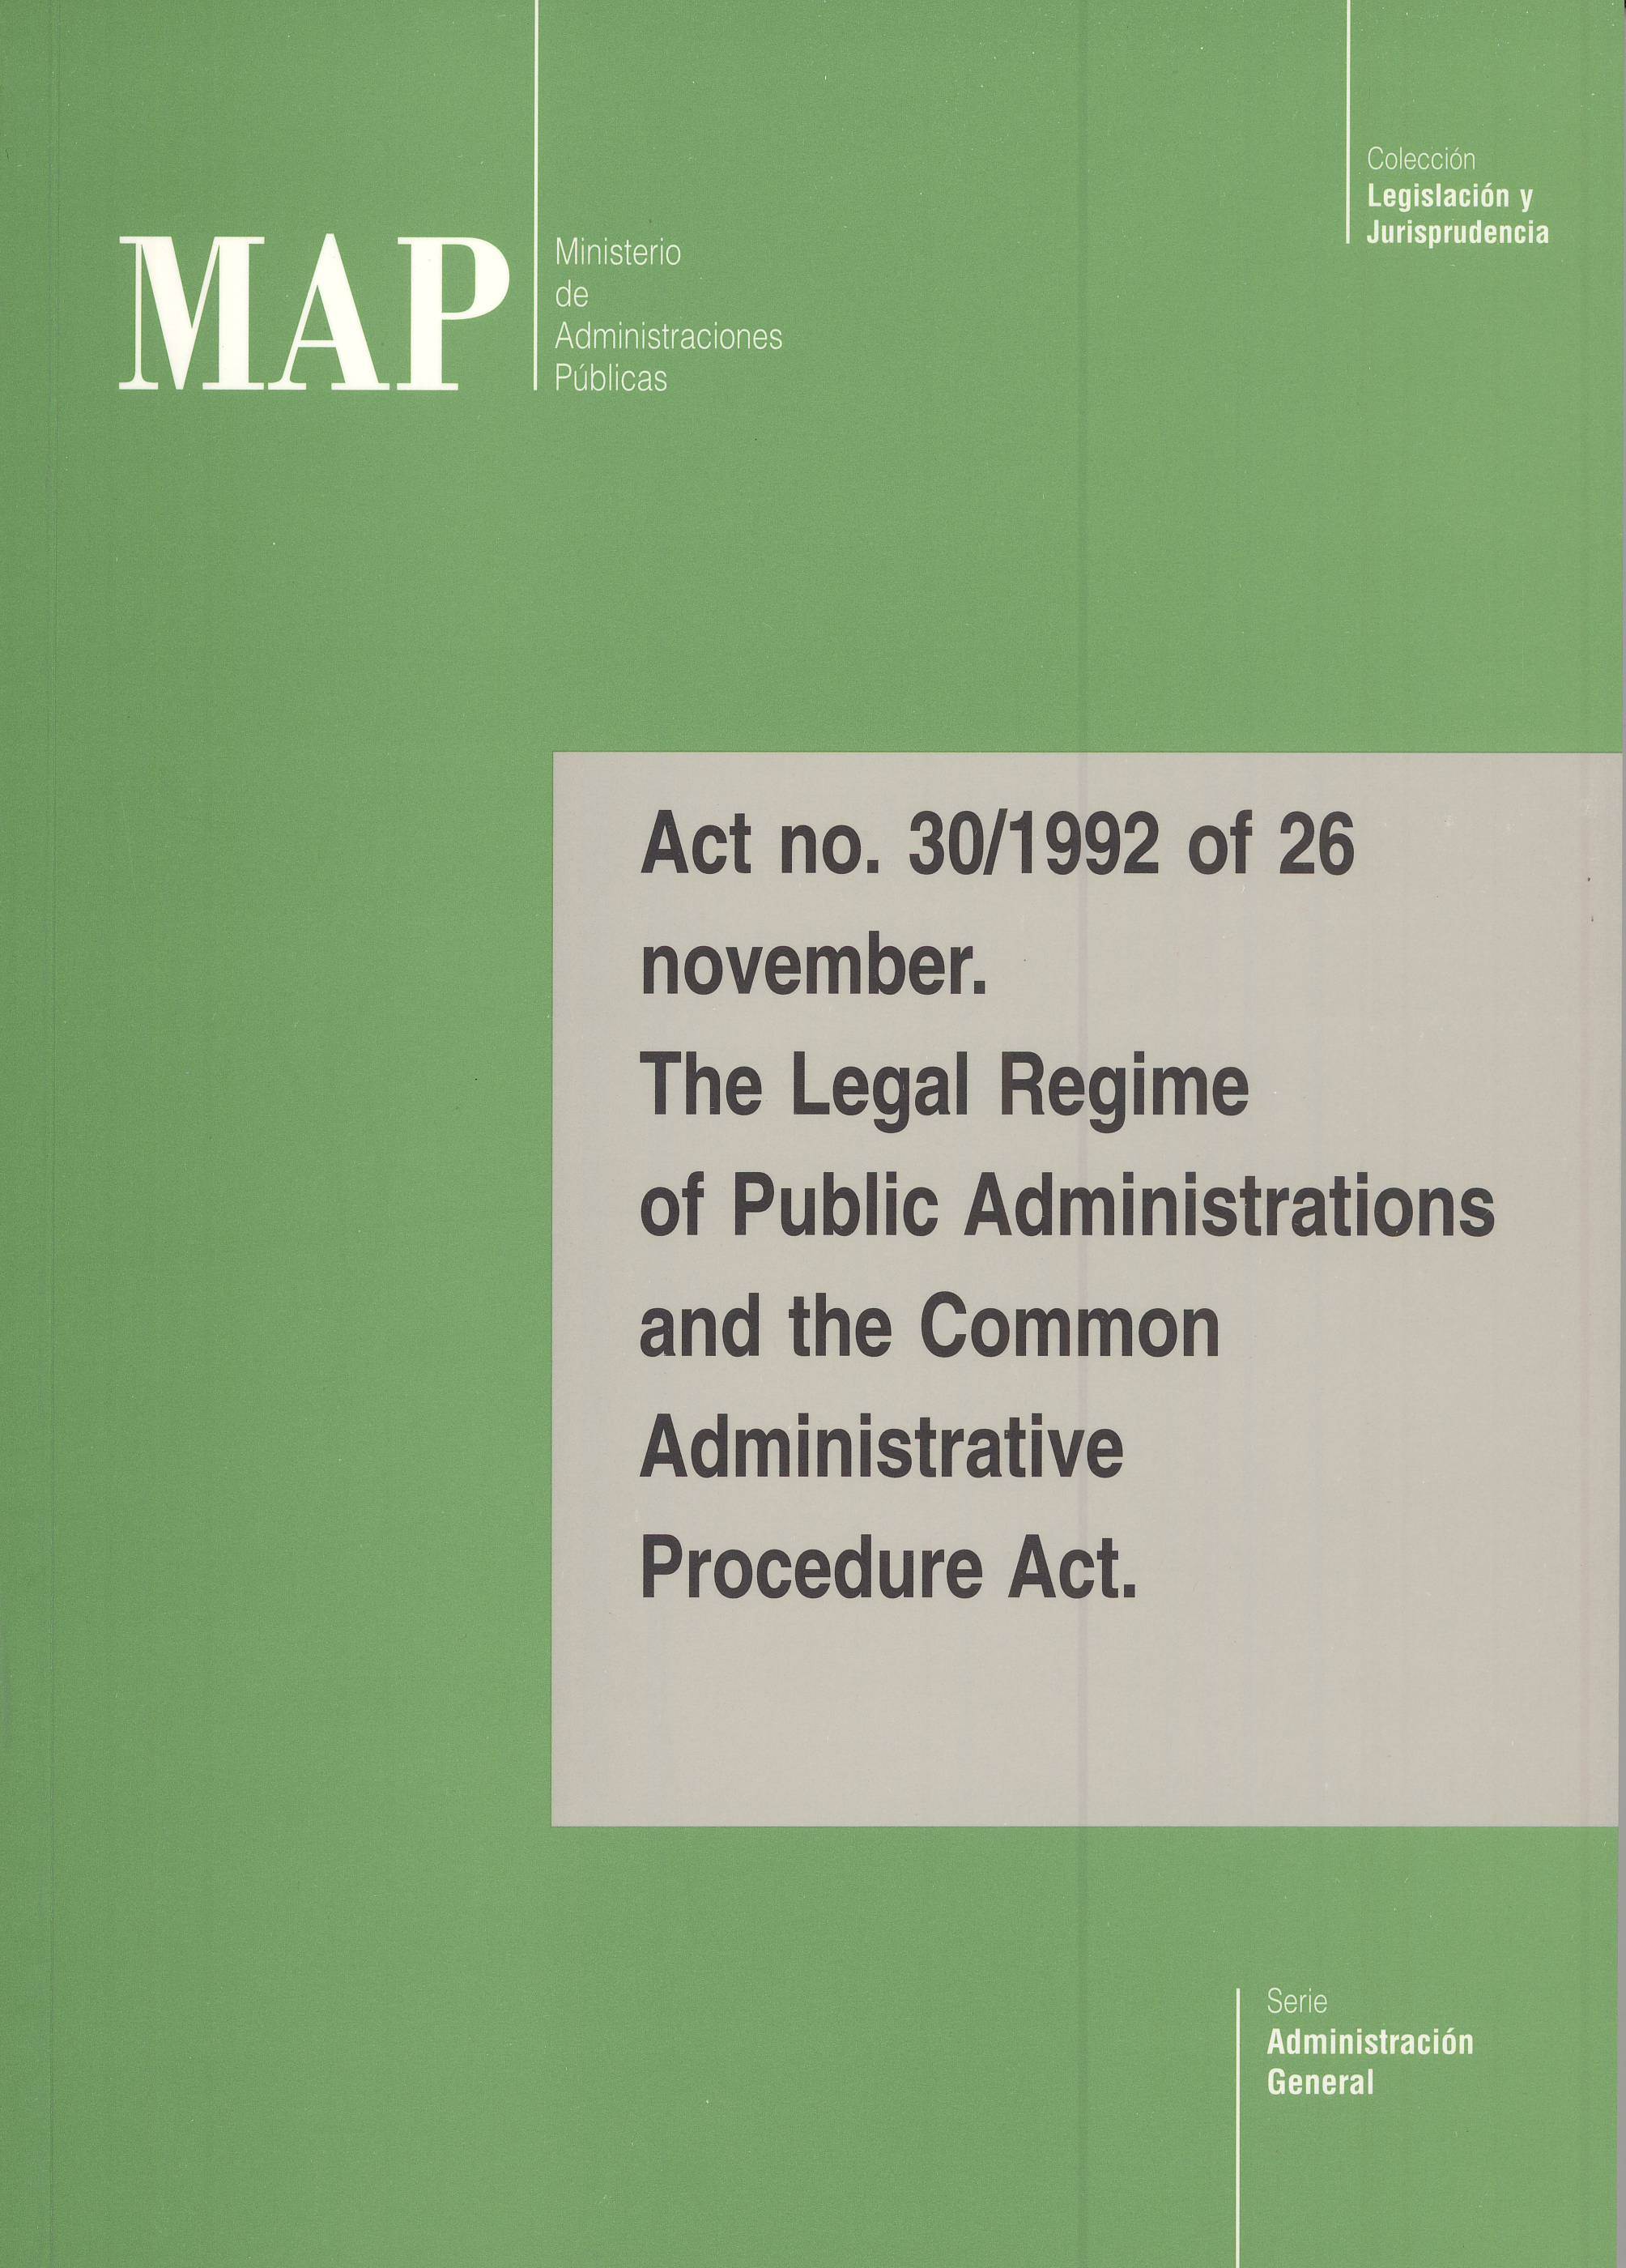 Portada del libro: Act no. 30/1992 of 26 november. The Legal Regime of Public Administrations and the Common Administrative Procedure Act.